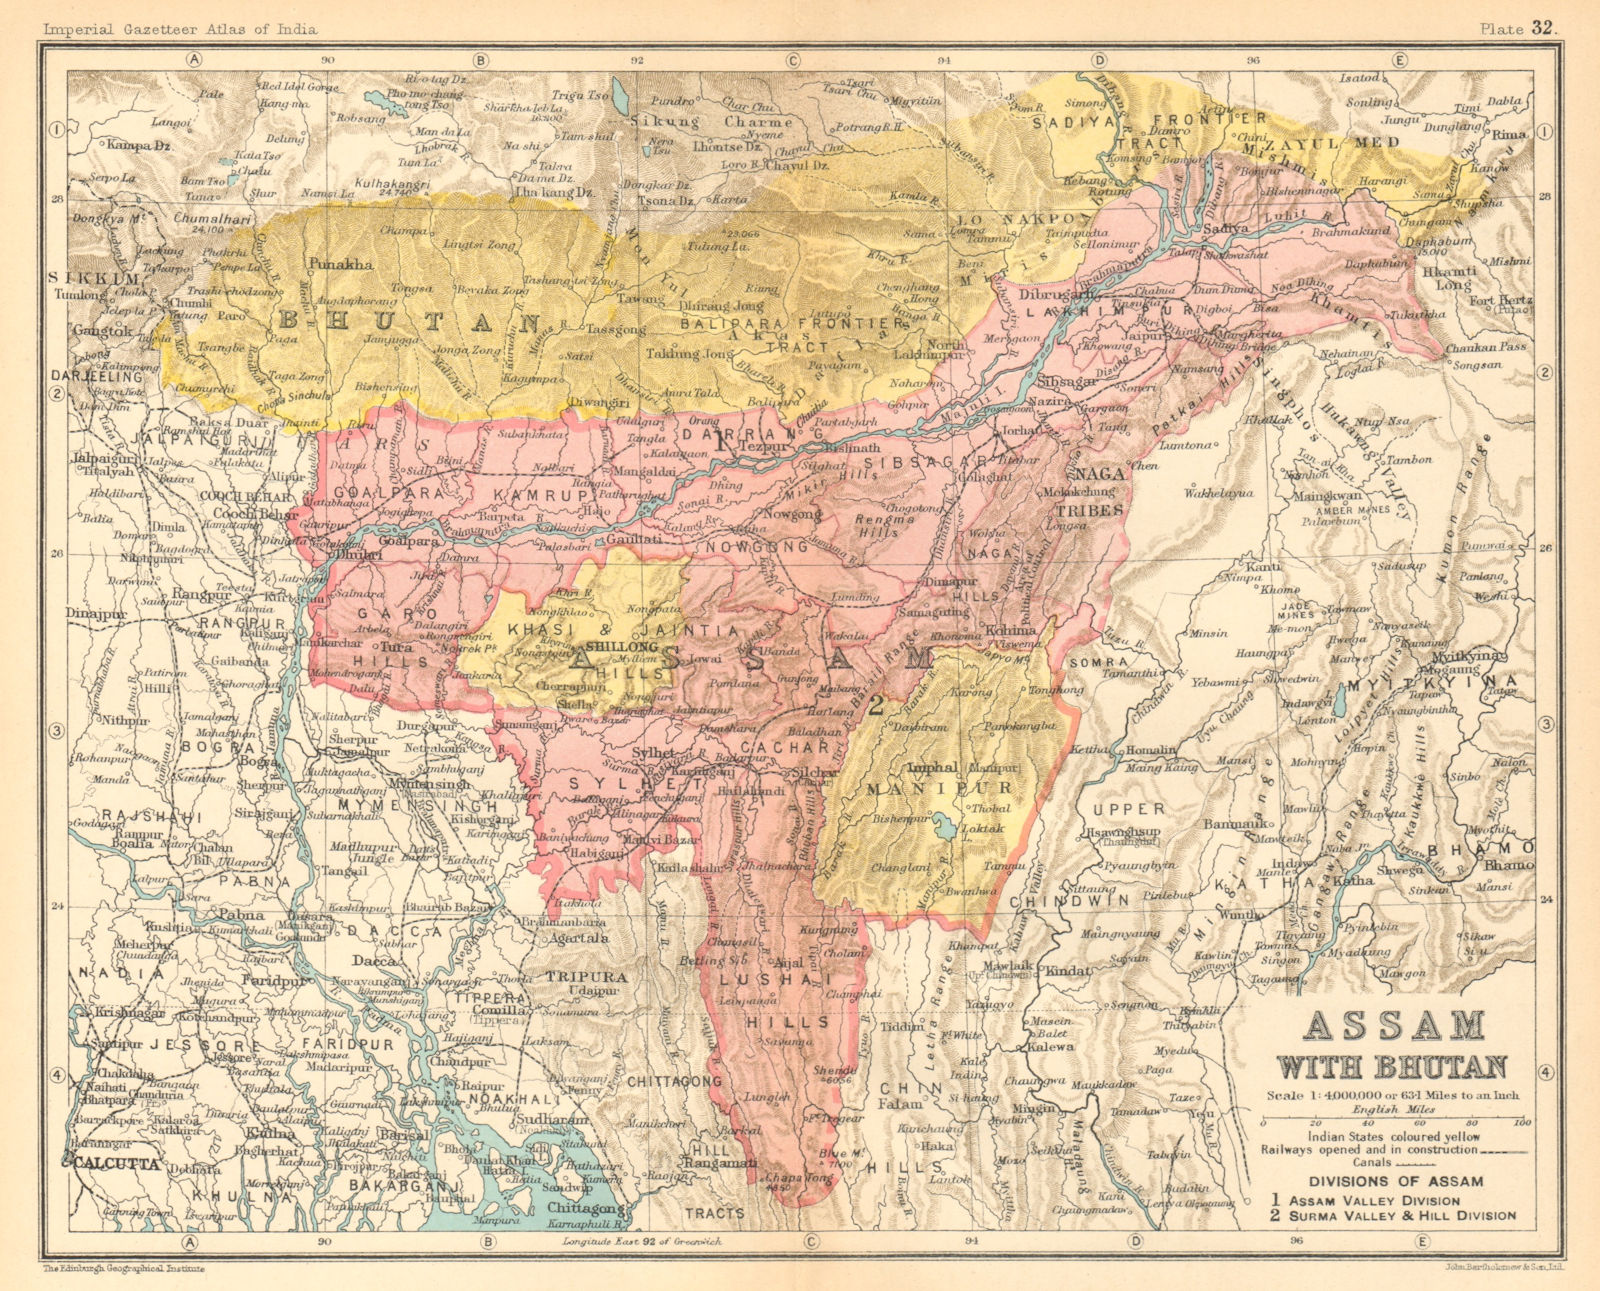 'Assam with Bhutan'. North-east British India/Bangladesh provinces 1931 map